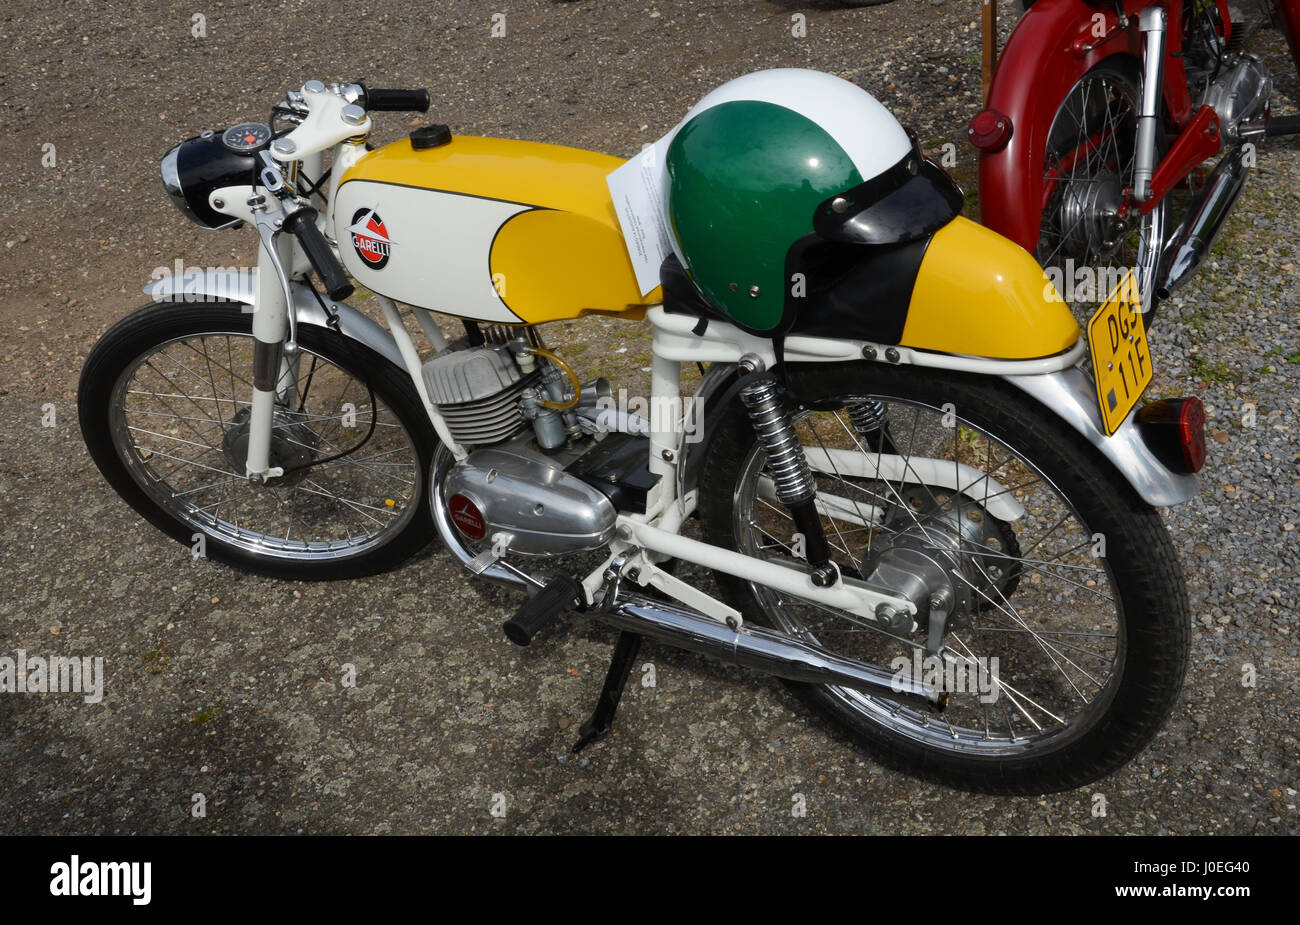 Garelli 50cc motorbike hi-res stock photography and images - Alamy